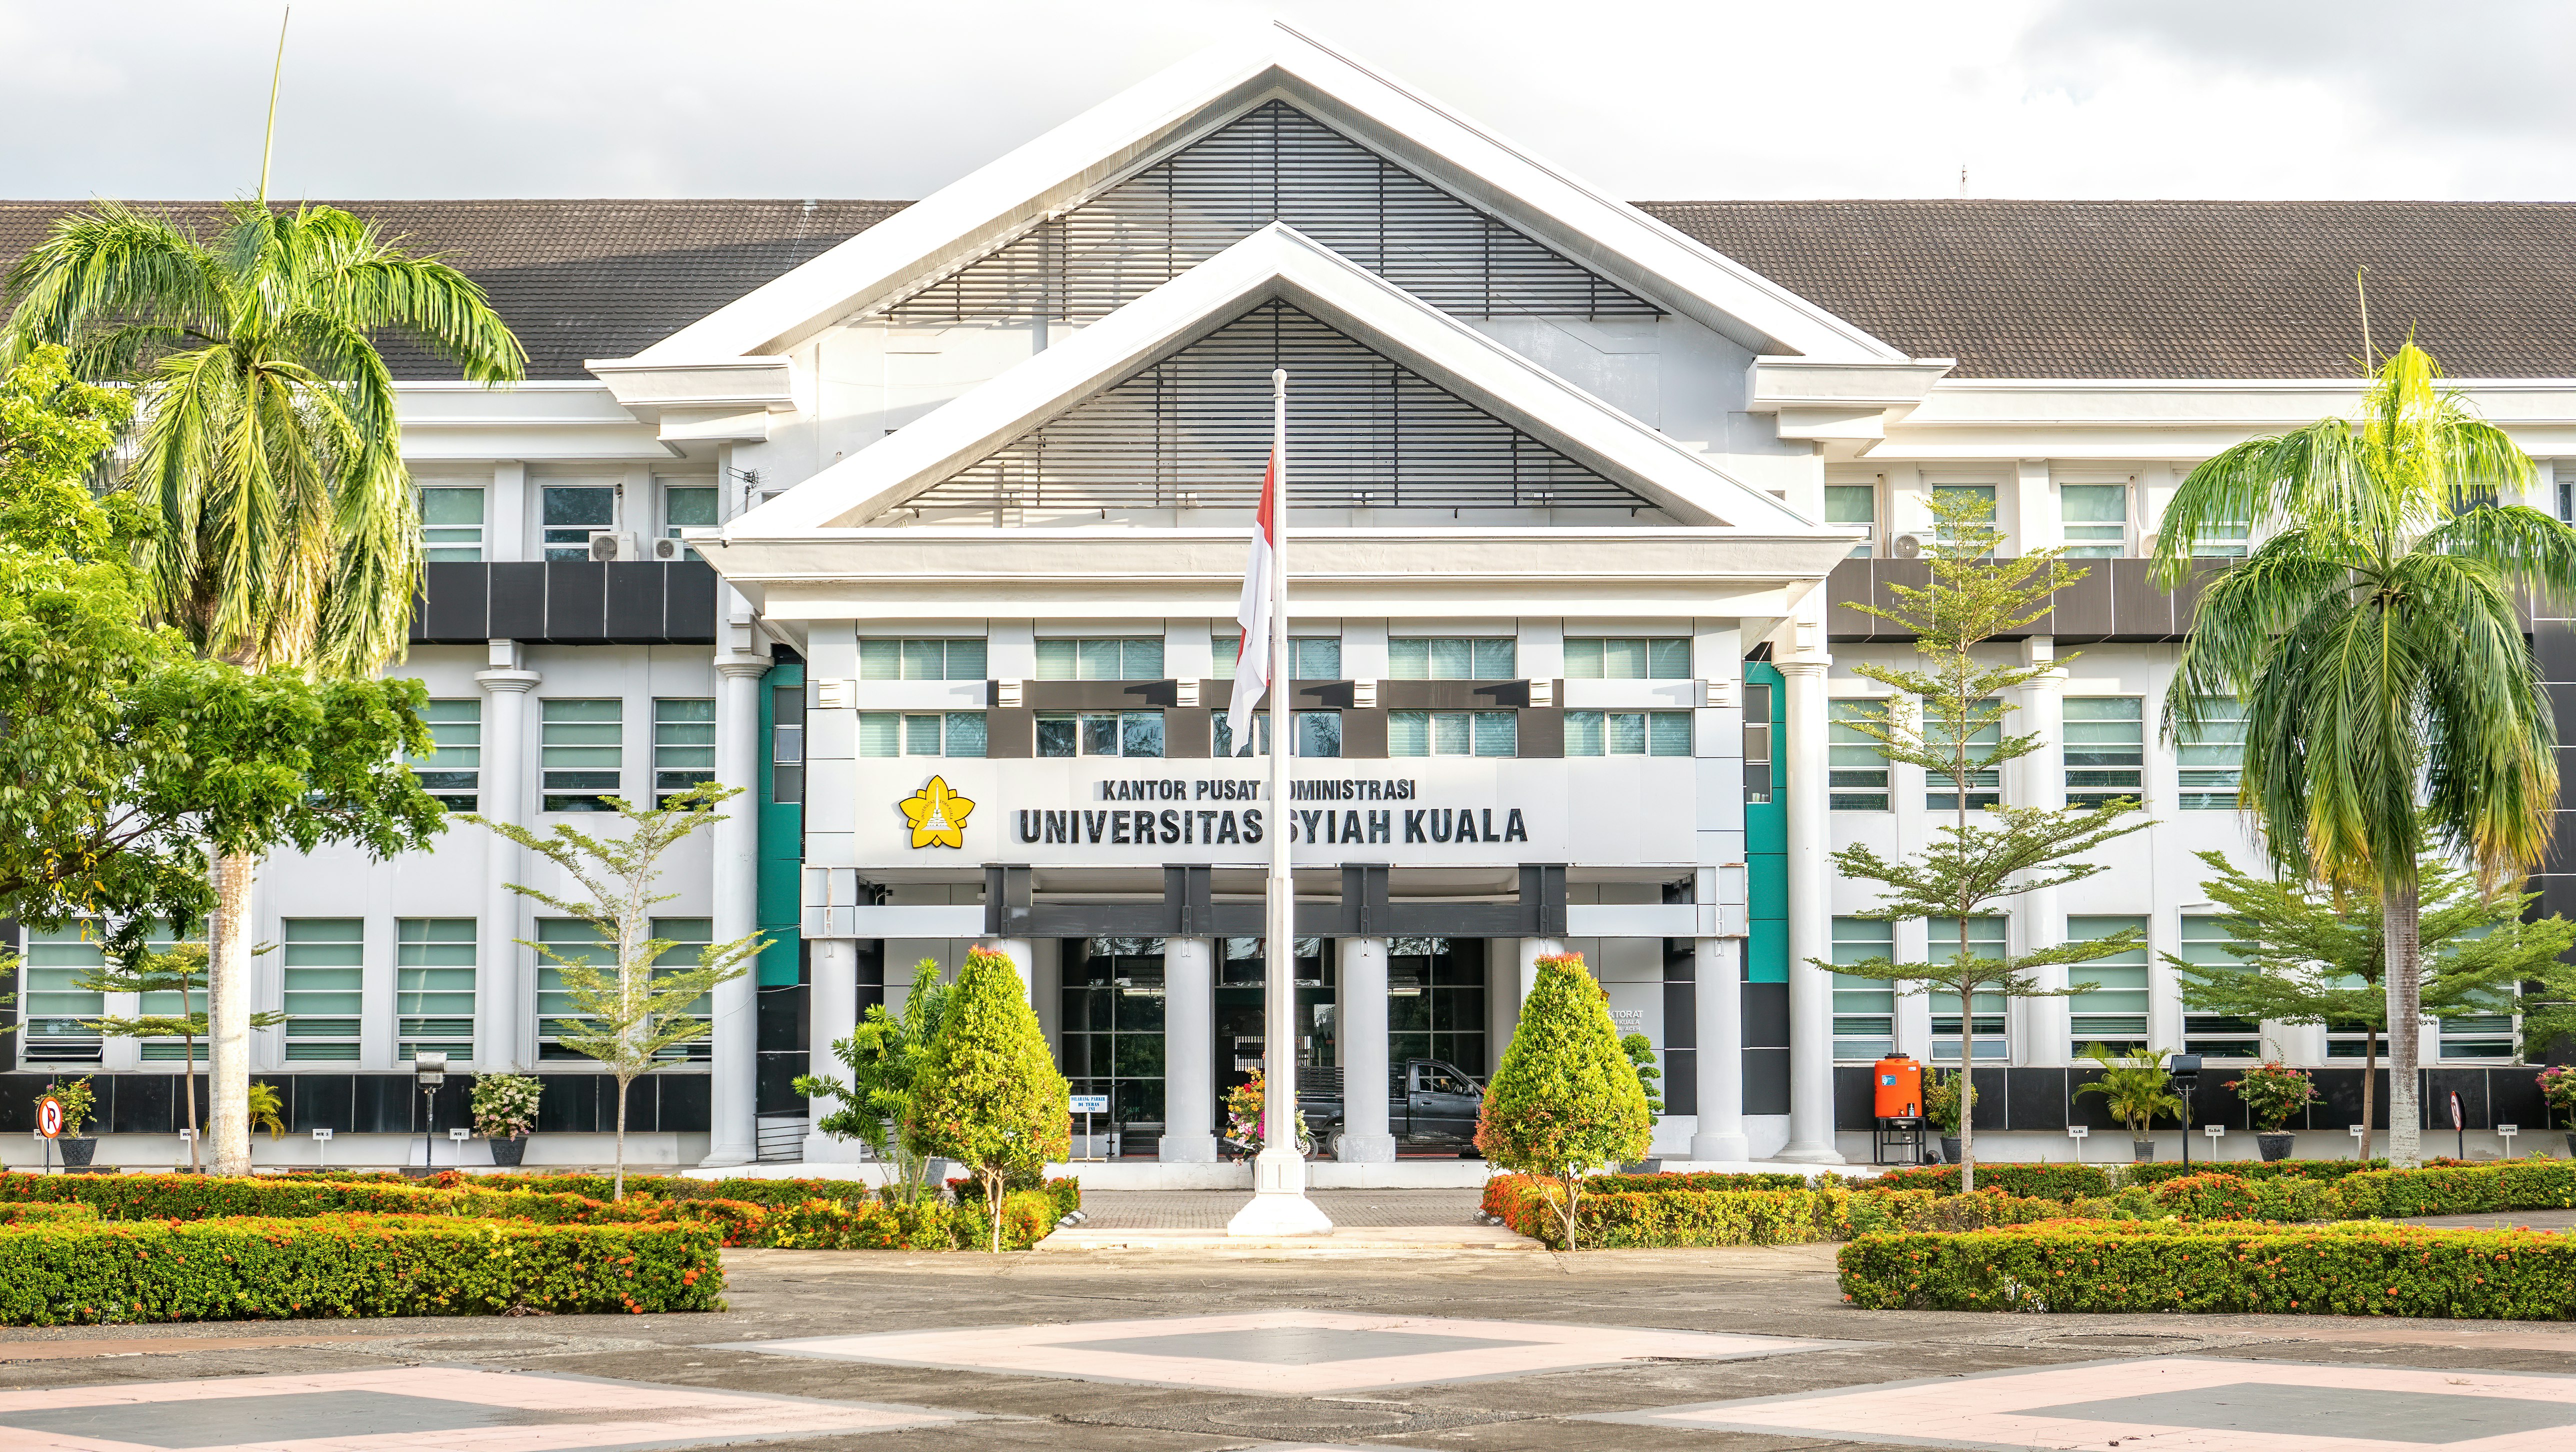 Syiah Kuala University (Universitas Syiah Kuala)